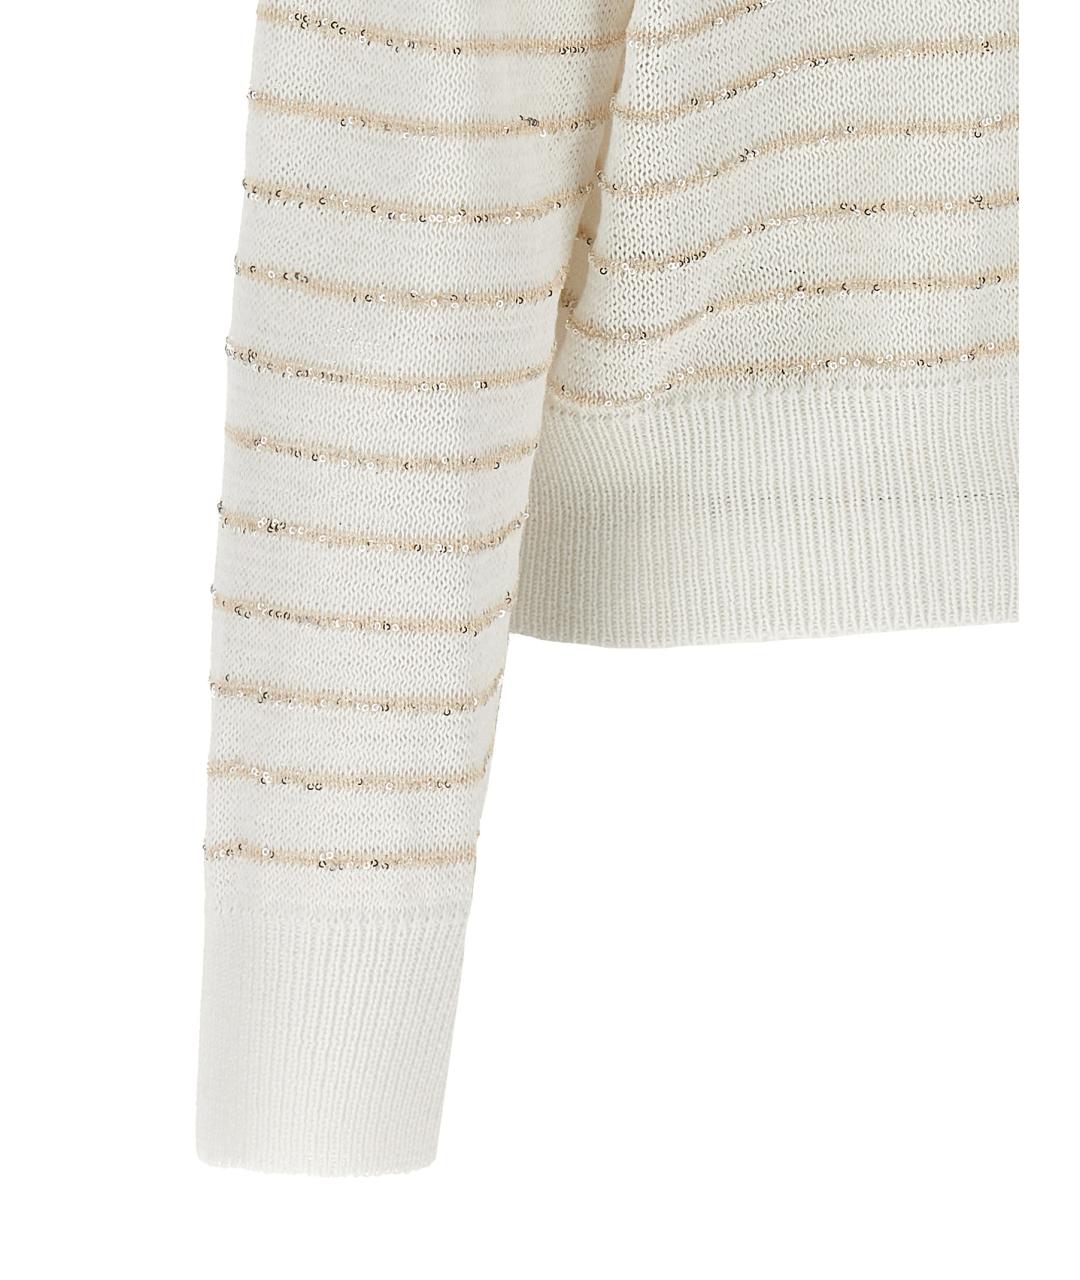 BRUNELLO CUCINELLI Белый хлопковый джемпер / свитер, фото 4